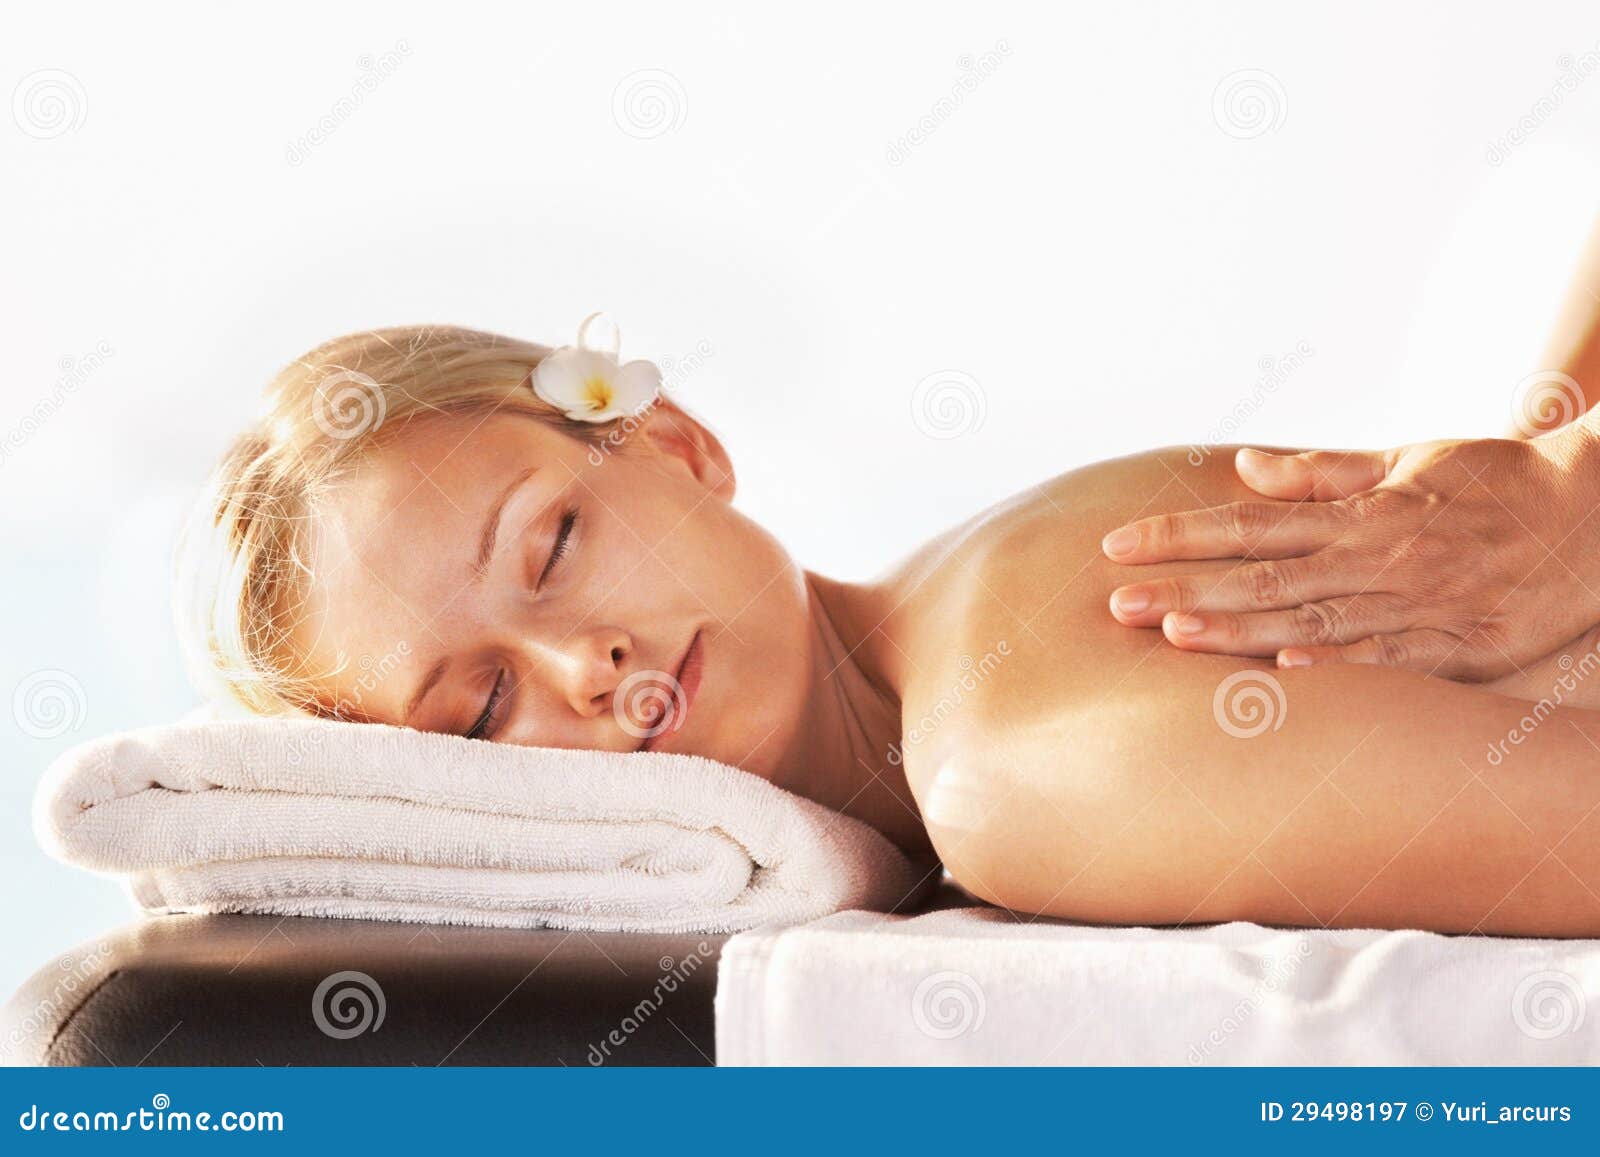 Unwinding Massage Therapy Stock Image Image Of Life